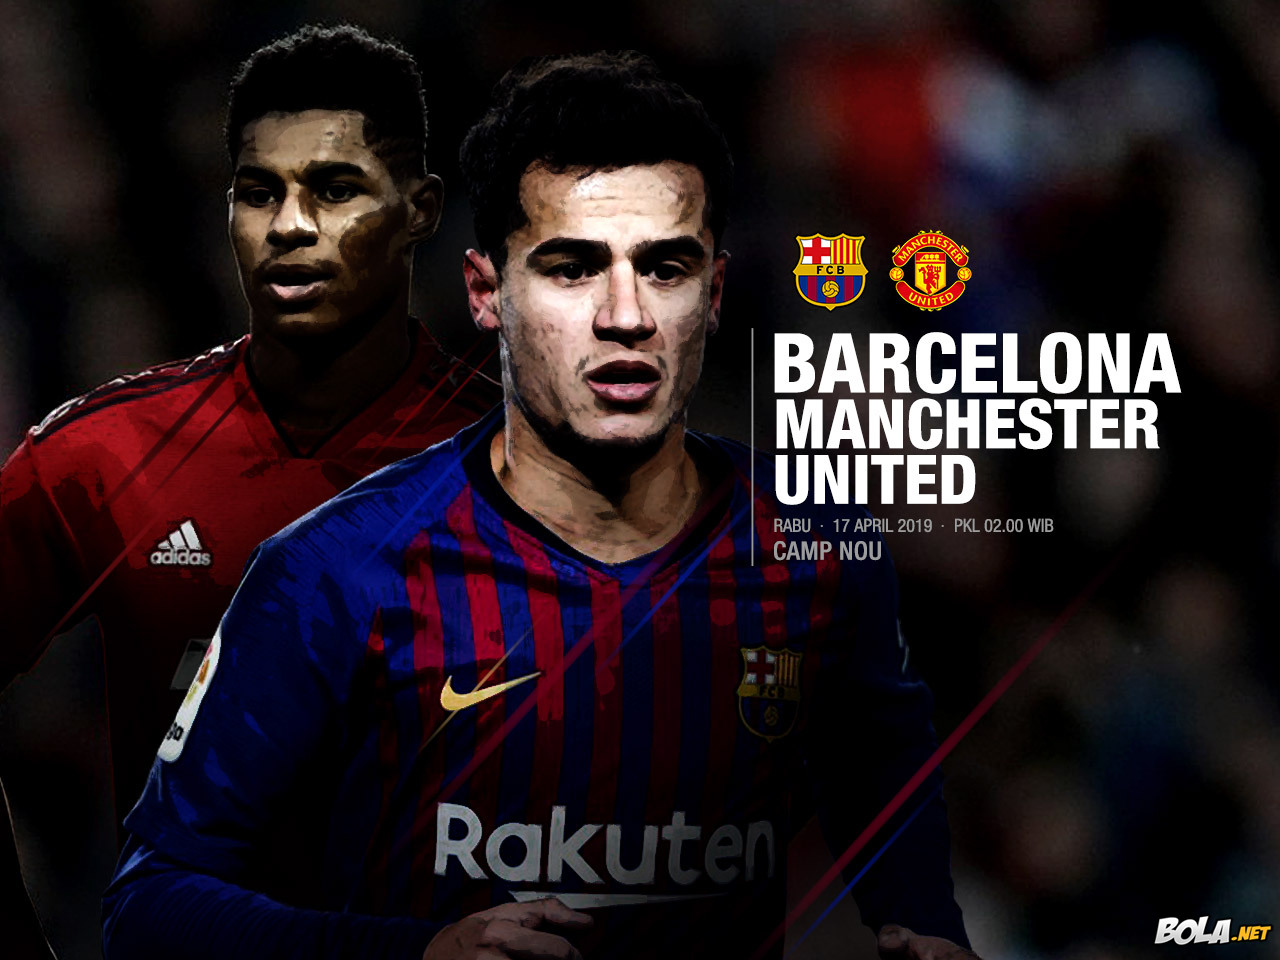 Deskripsi : Wallpaper Barcelona Vs Manchester United, size: 1280x960